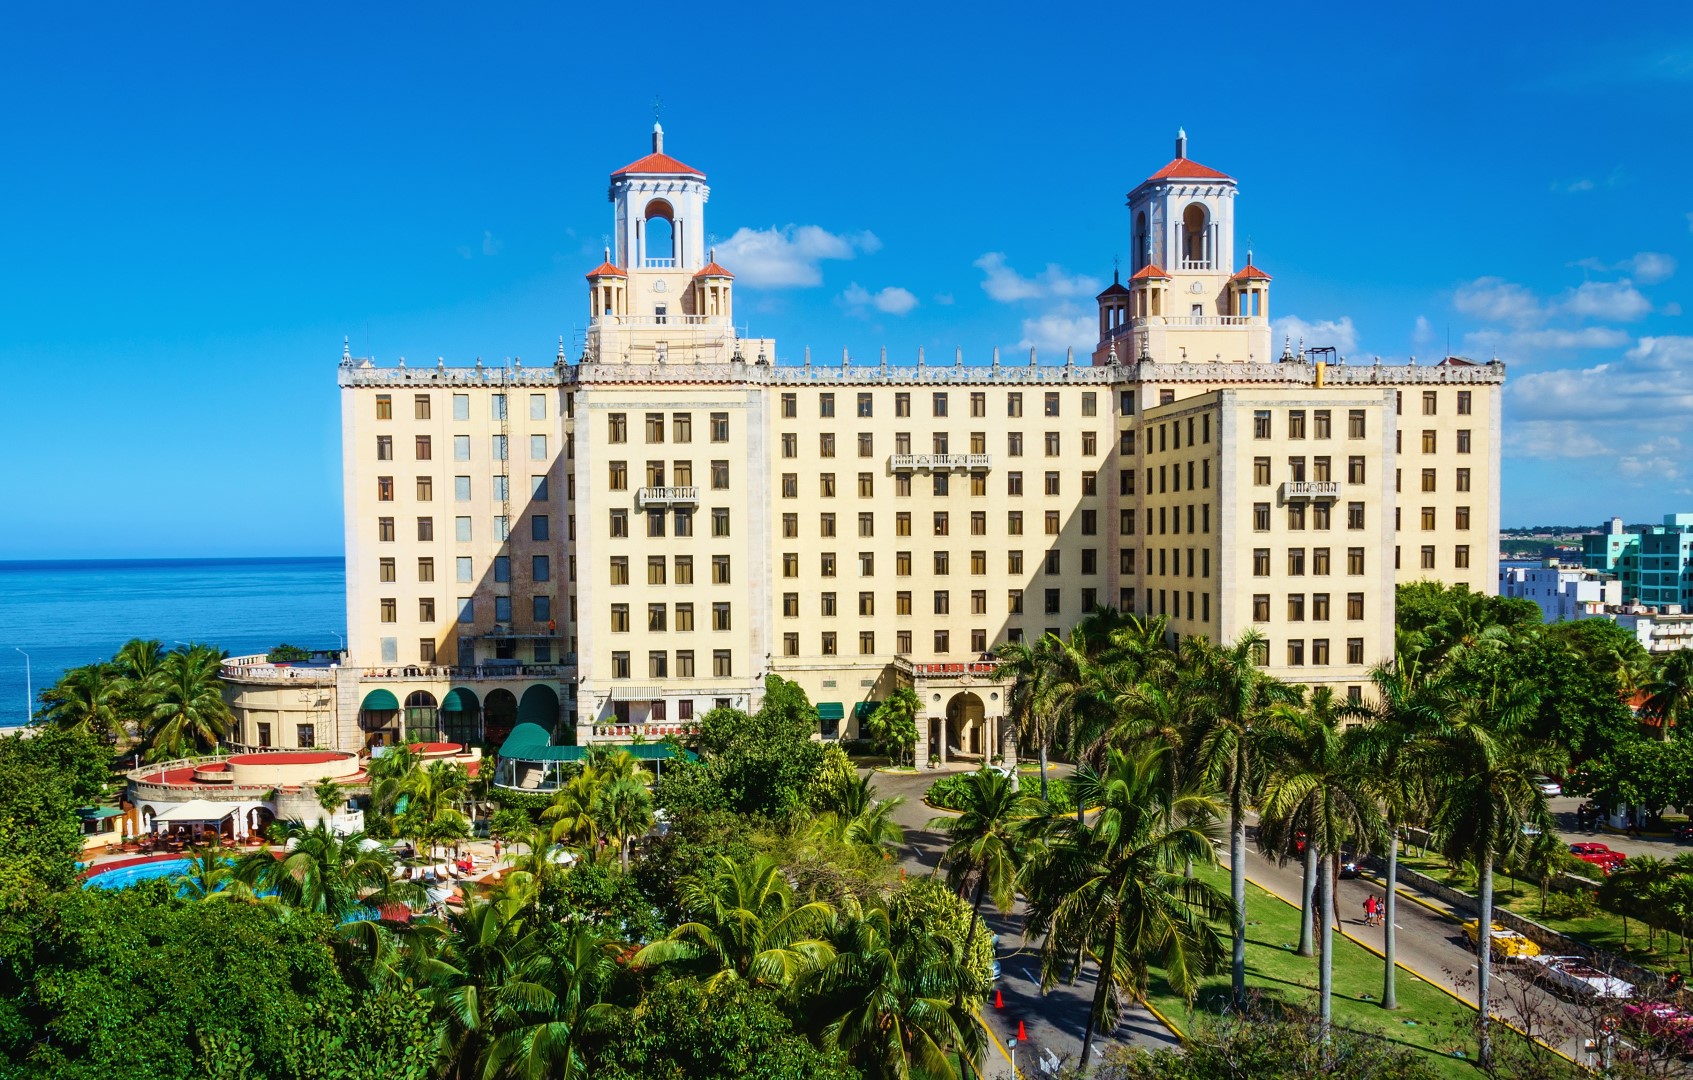 Aerial view of the Hotel Nacional in Havana, Cuba